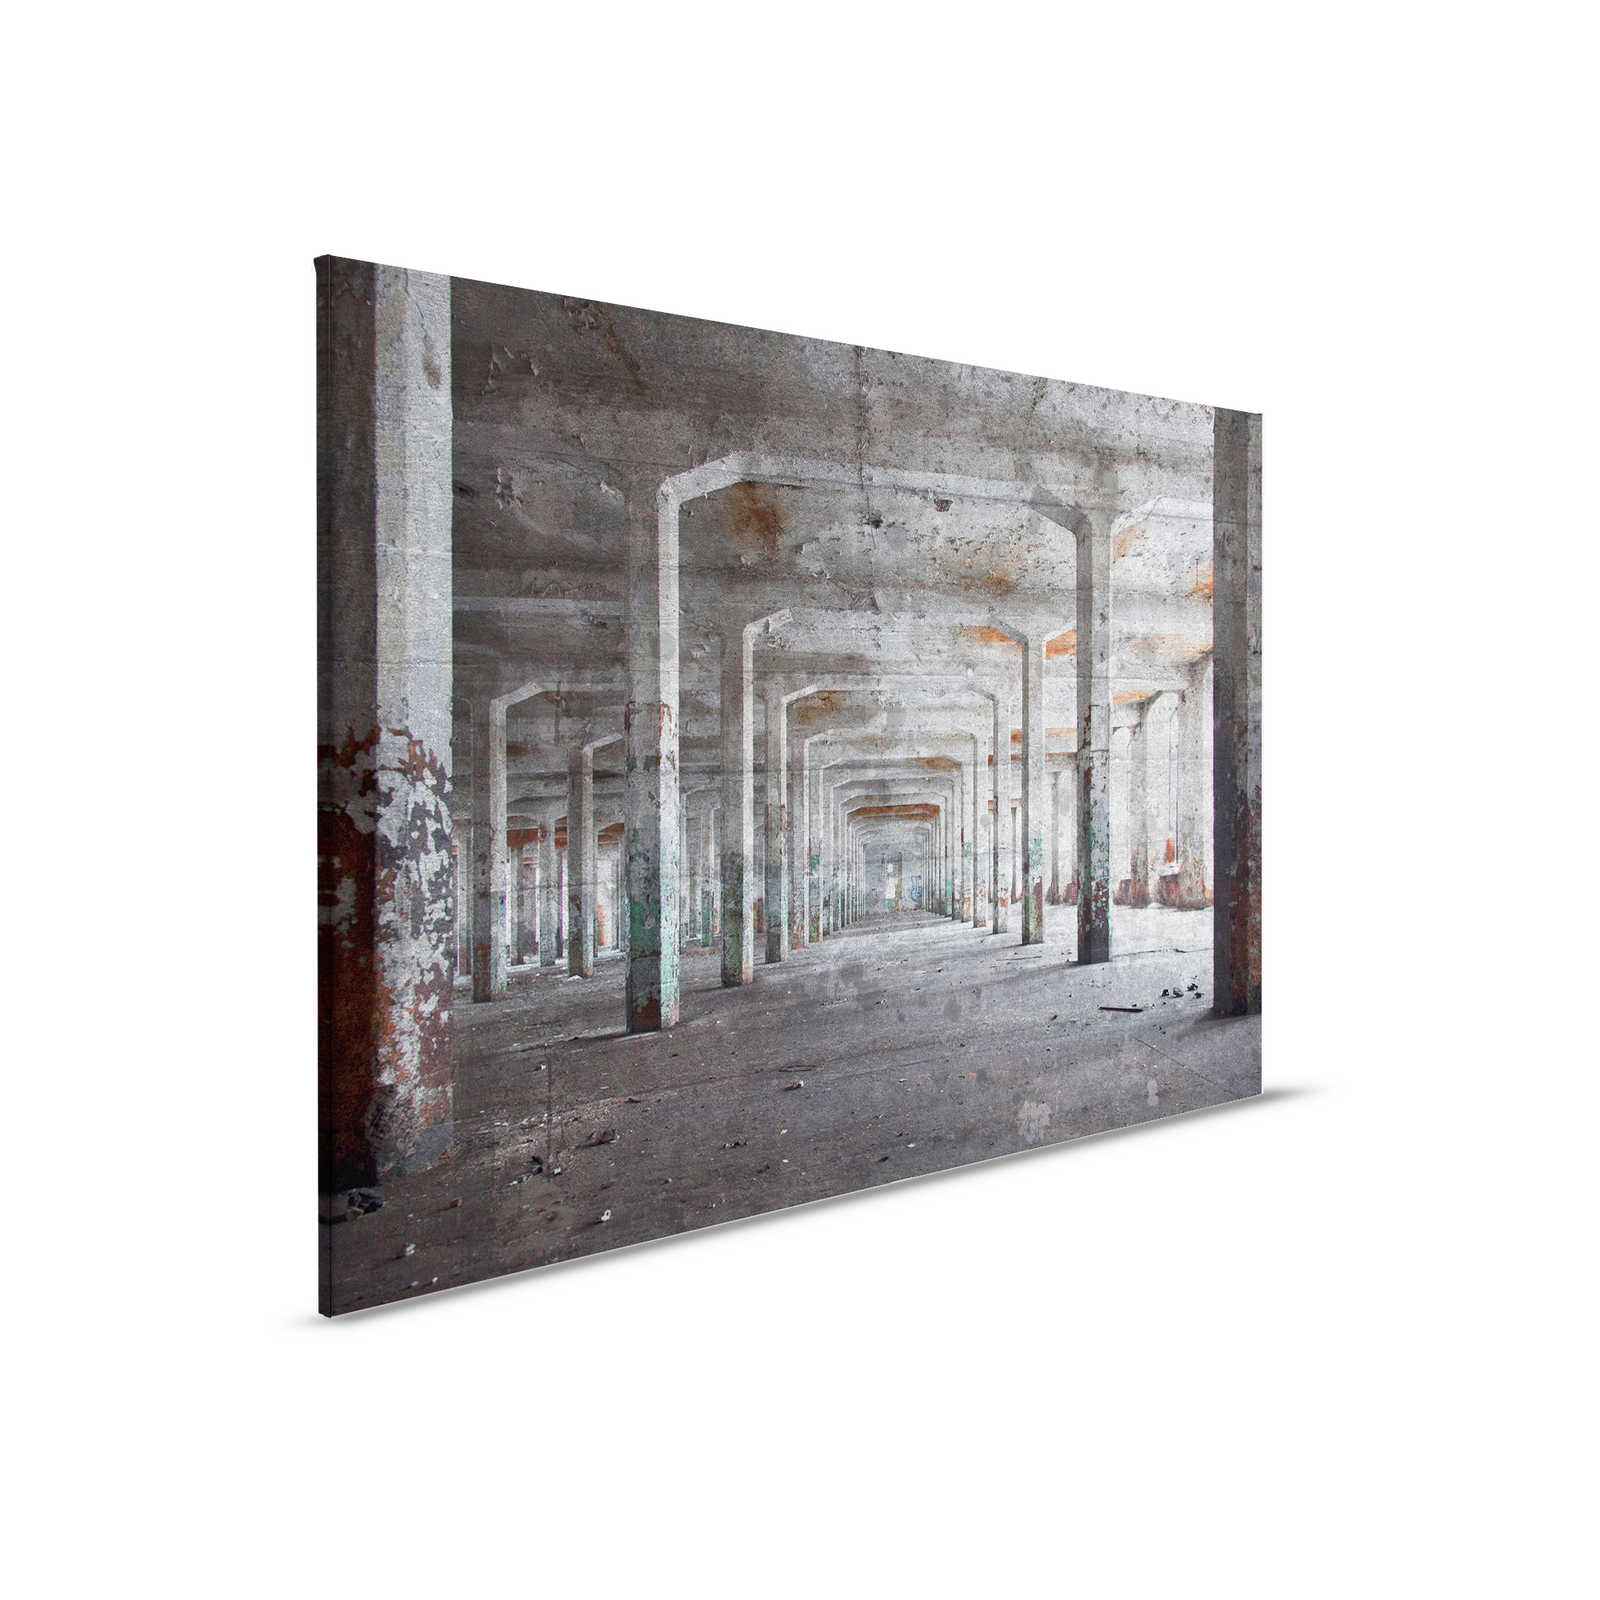         Canvas with old concrete building with 3D optics - 0.90 m x 0.60 m
    